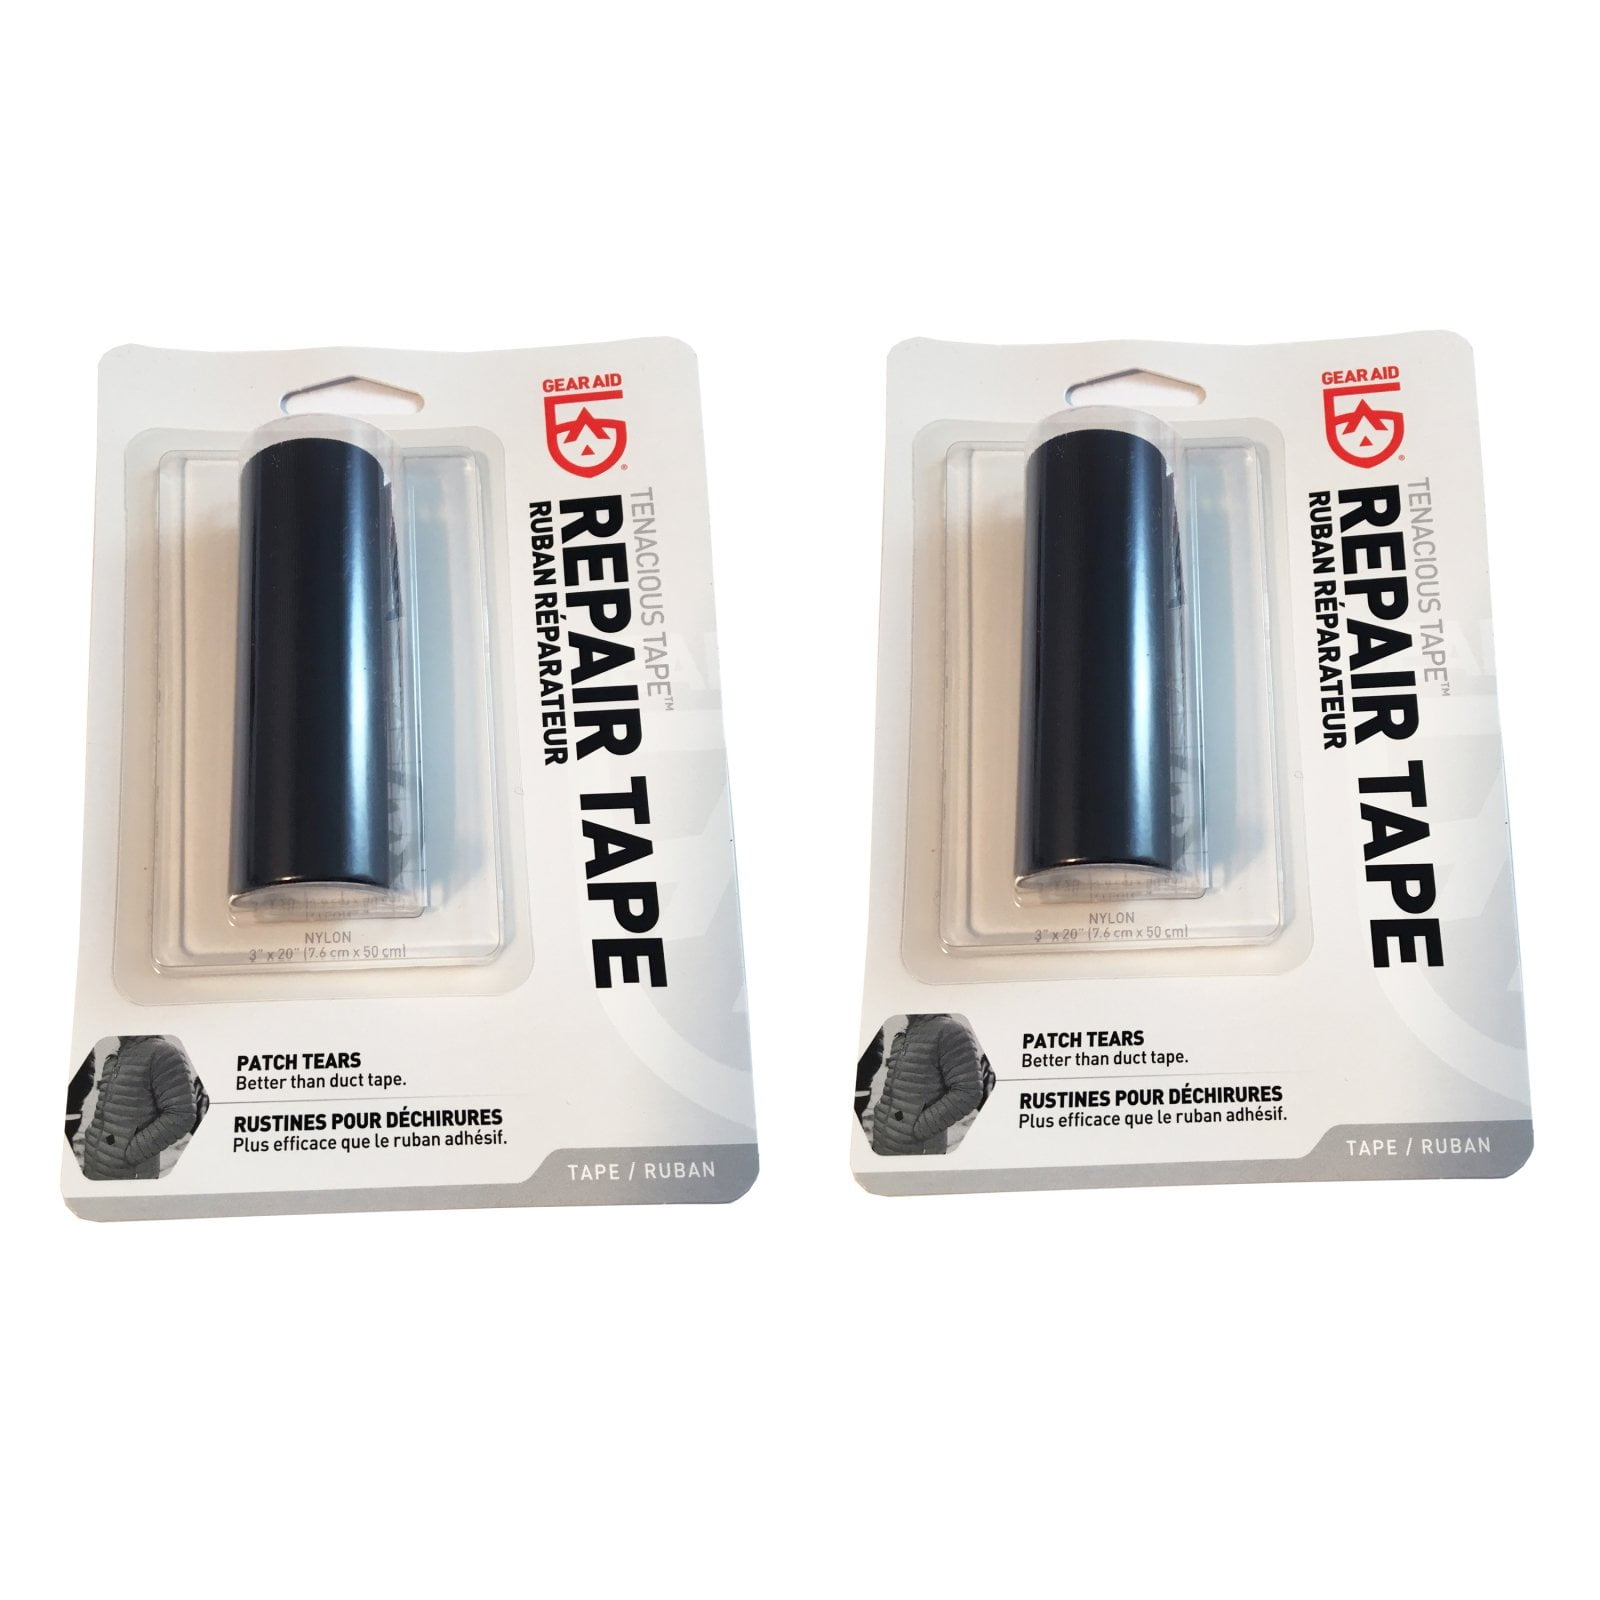 2 Pack) Gear Aid Tenacious Tape Fabric Repair Tape Black 